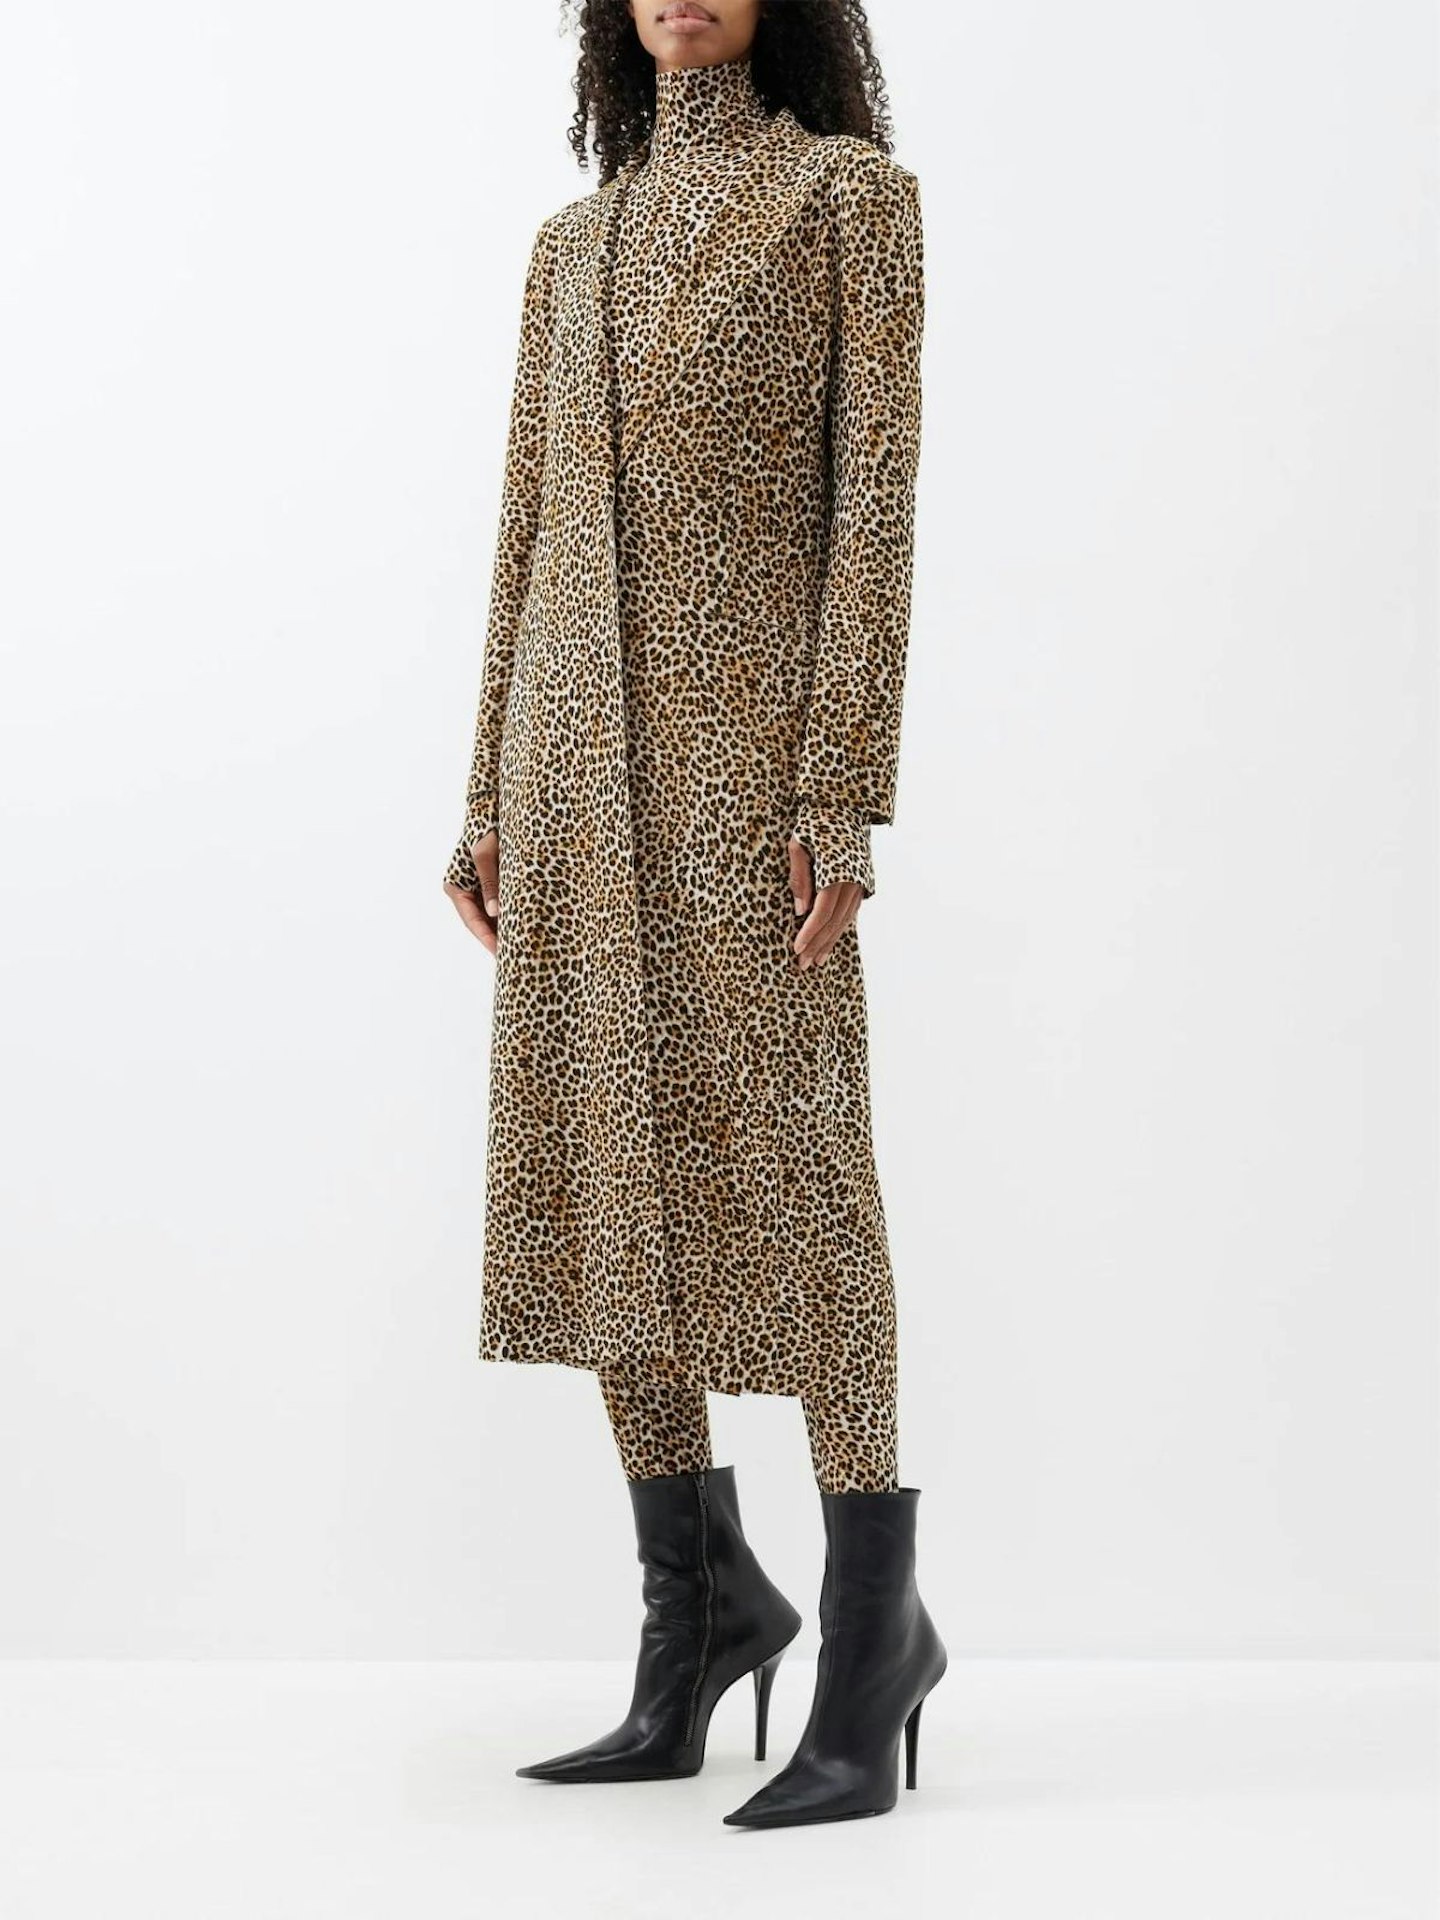 Leo - Norma Kamali Leopard-Print Jersey Coat